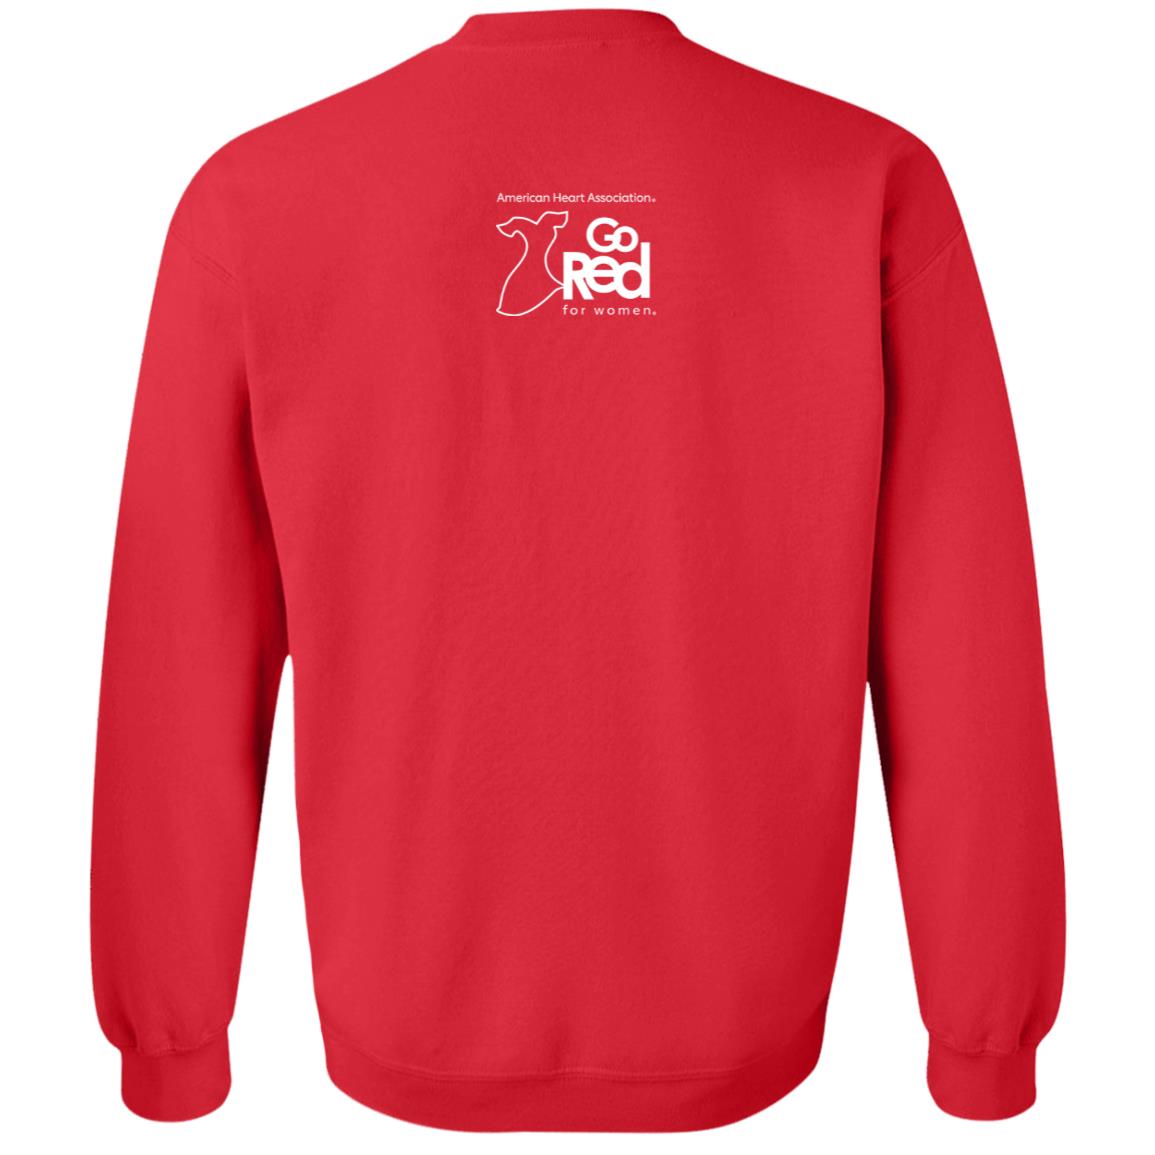 Red crewneck sweatshirt - back. Go Red for Women logo top center.